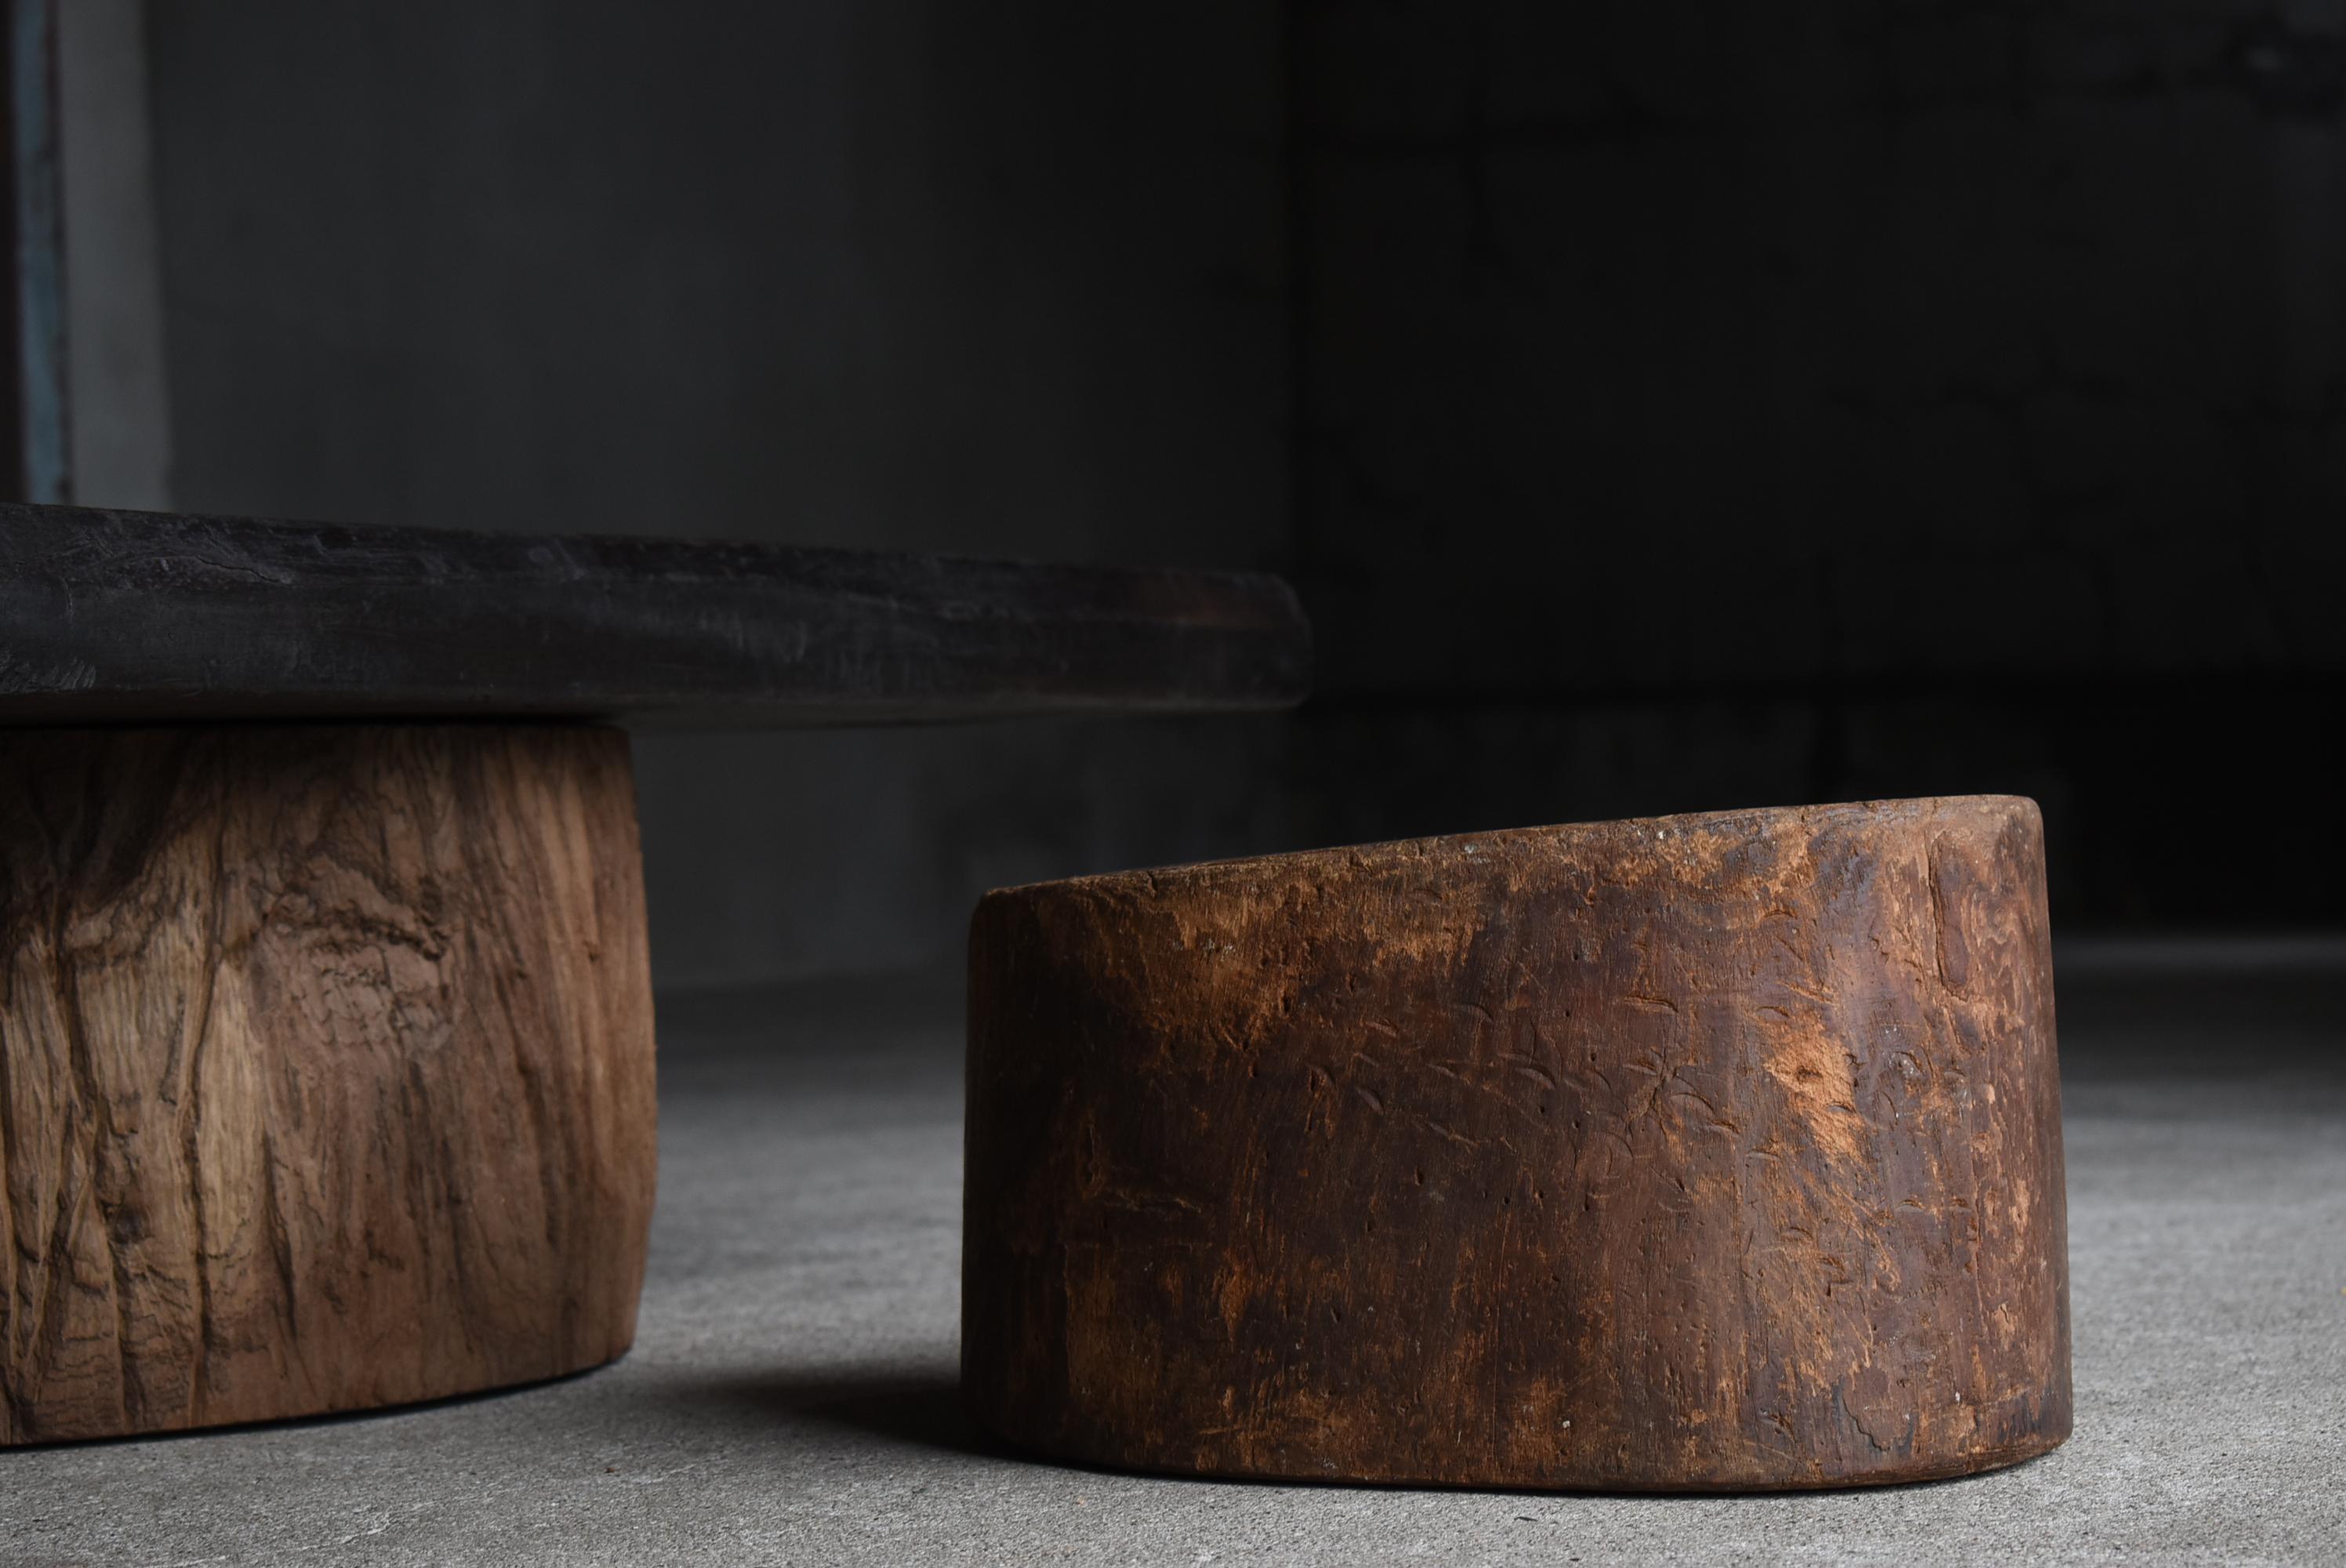 Japanese Antique Wooden Block Stool 1860s-1900s / Wabisabi Wood Chair Primitive 8